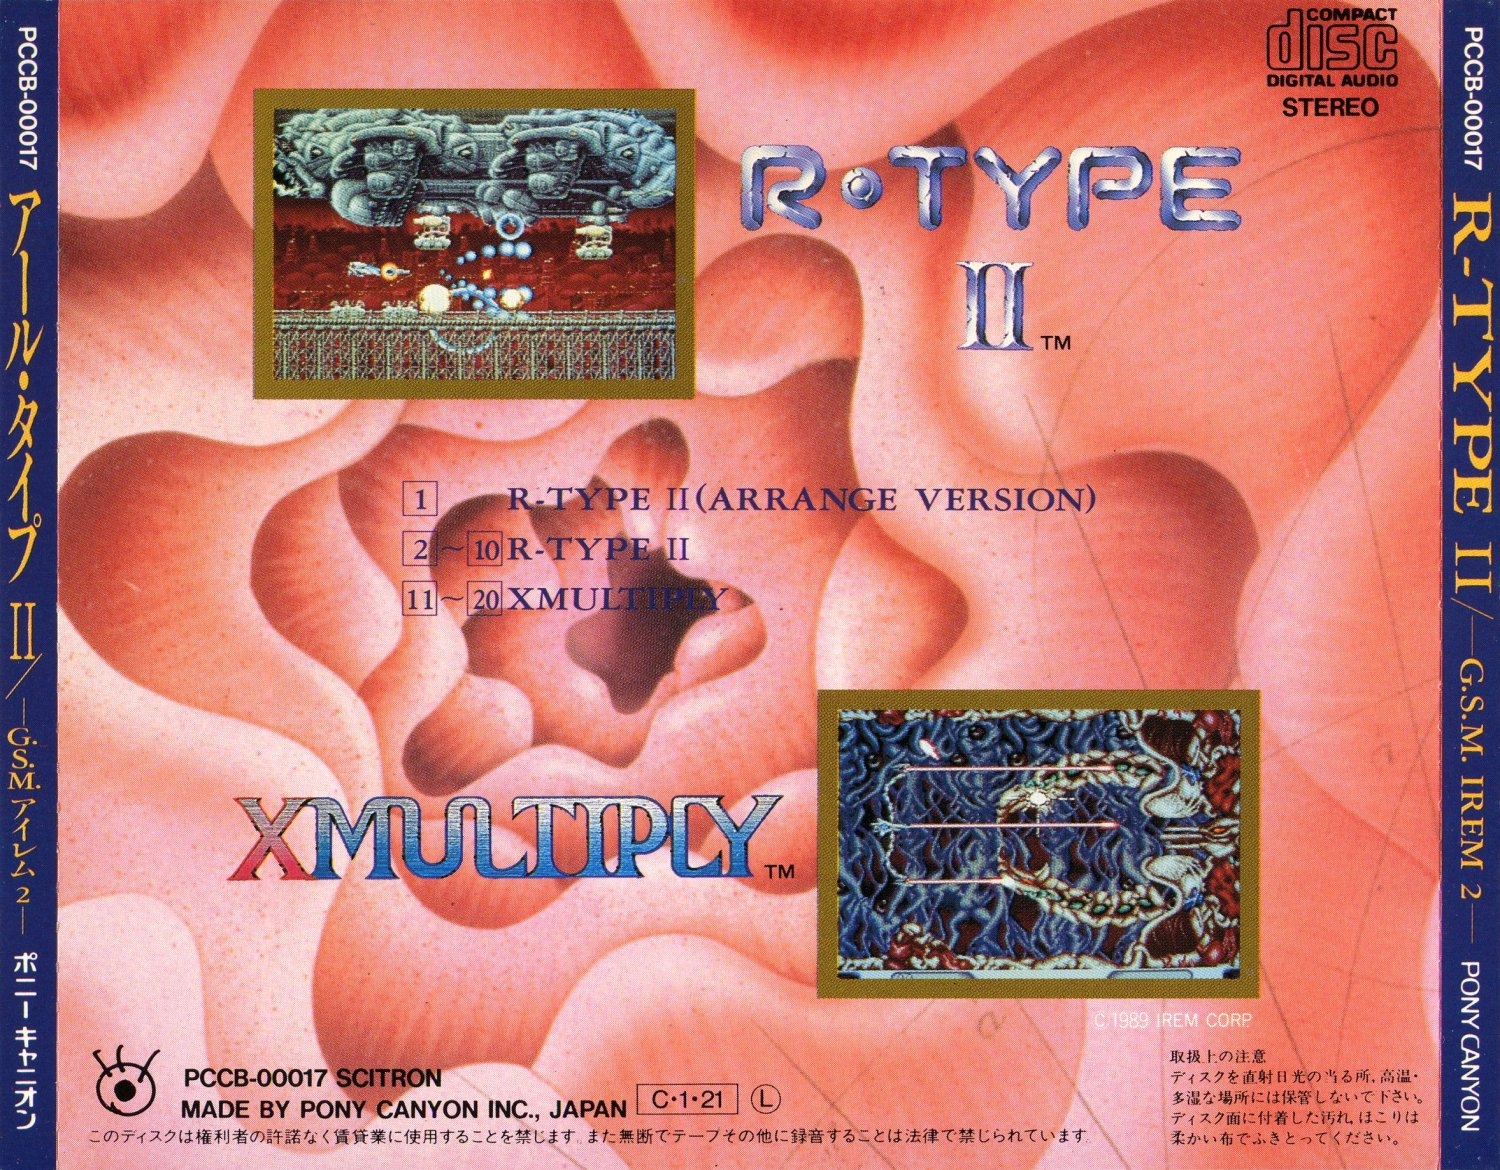 R-TYPE II -G.S.M. IREM 2- (1990) MP3 - Download R-TYPE II -G.S.M. IREM 2-  (1990) Soundtracks for FREE!